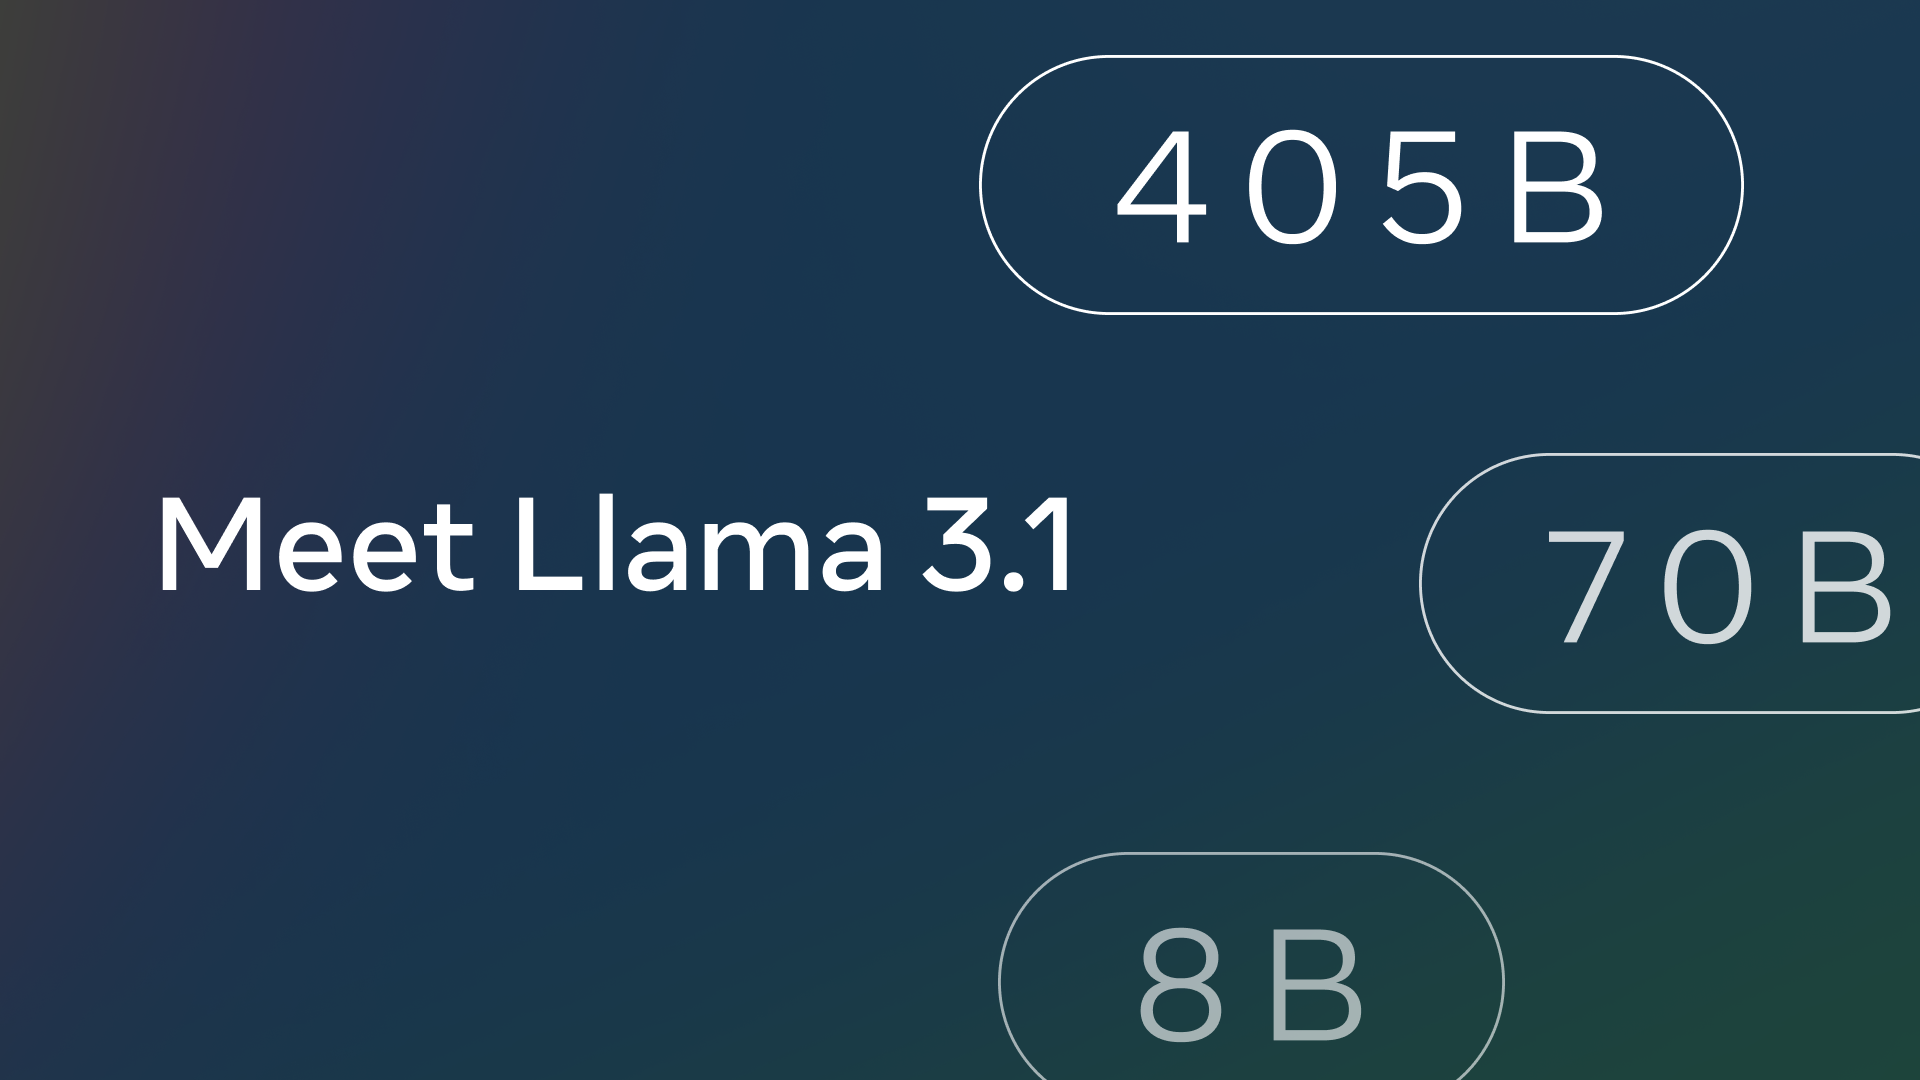 Introducing Llama 3.1: Meta’s Most Advanced Open-Source AI Model